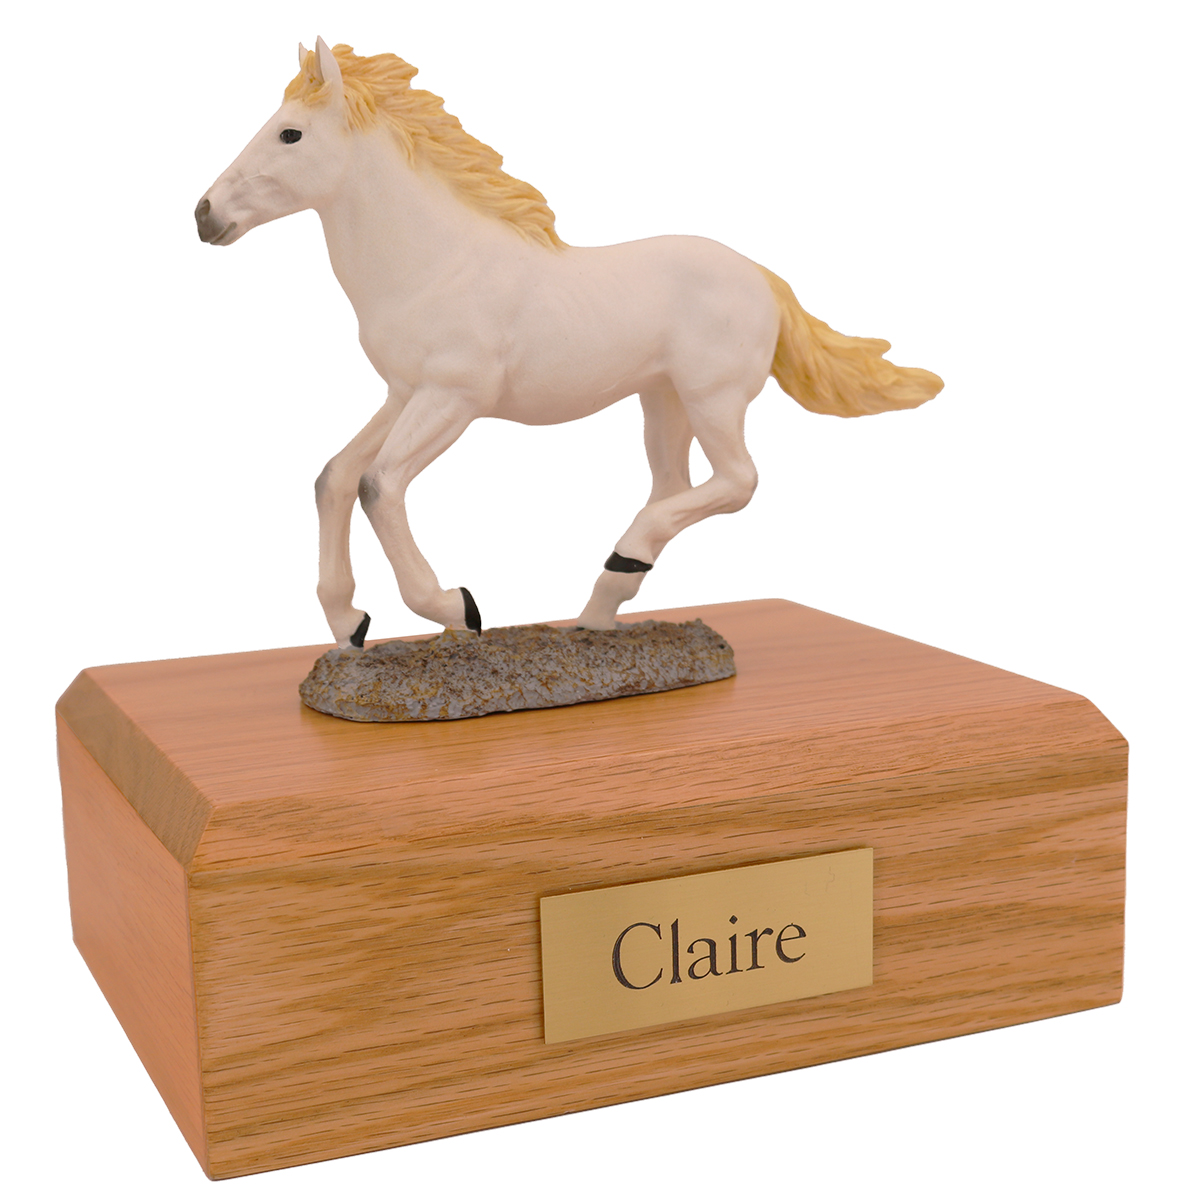 Horse, White, Running - Figurine Urn